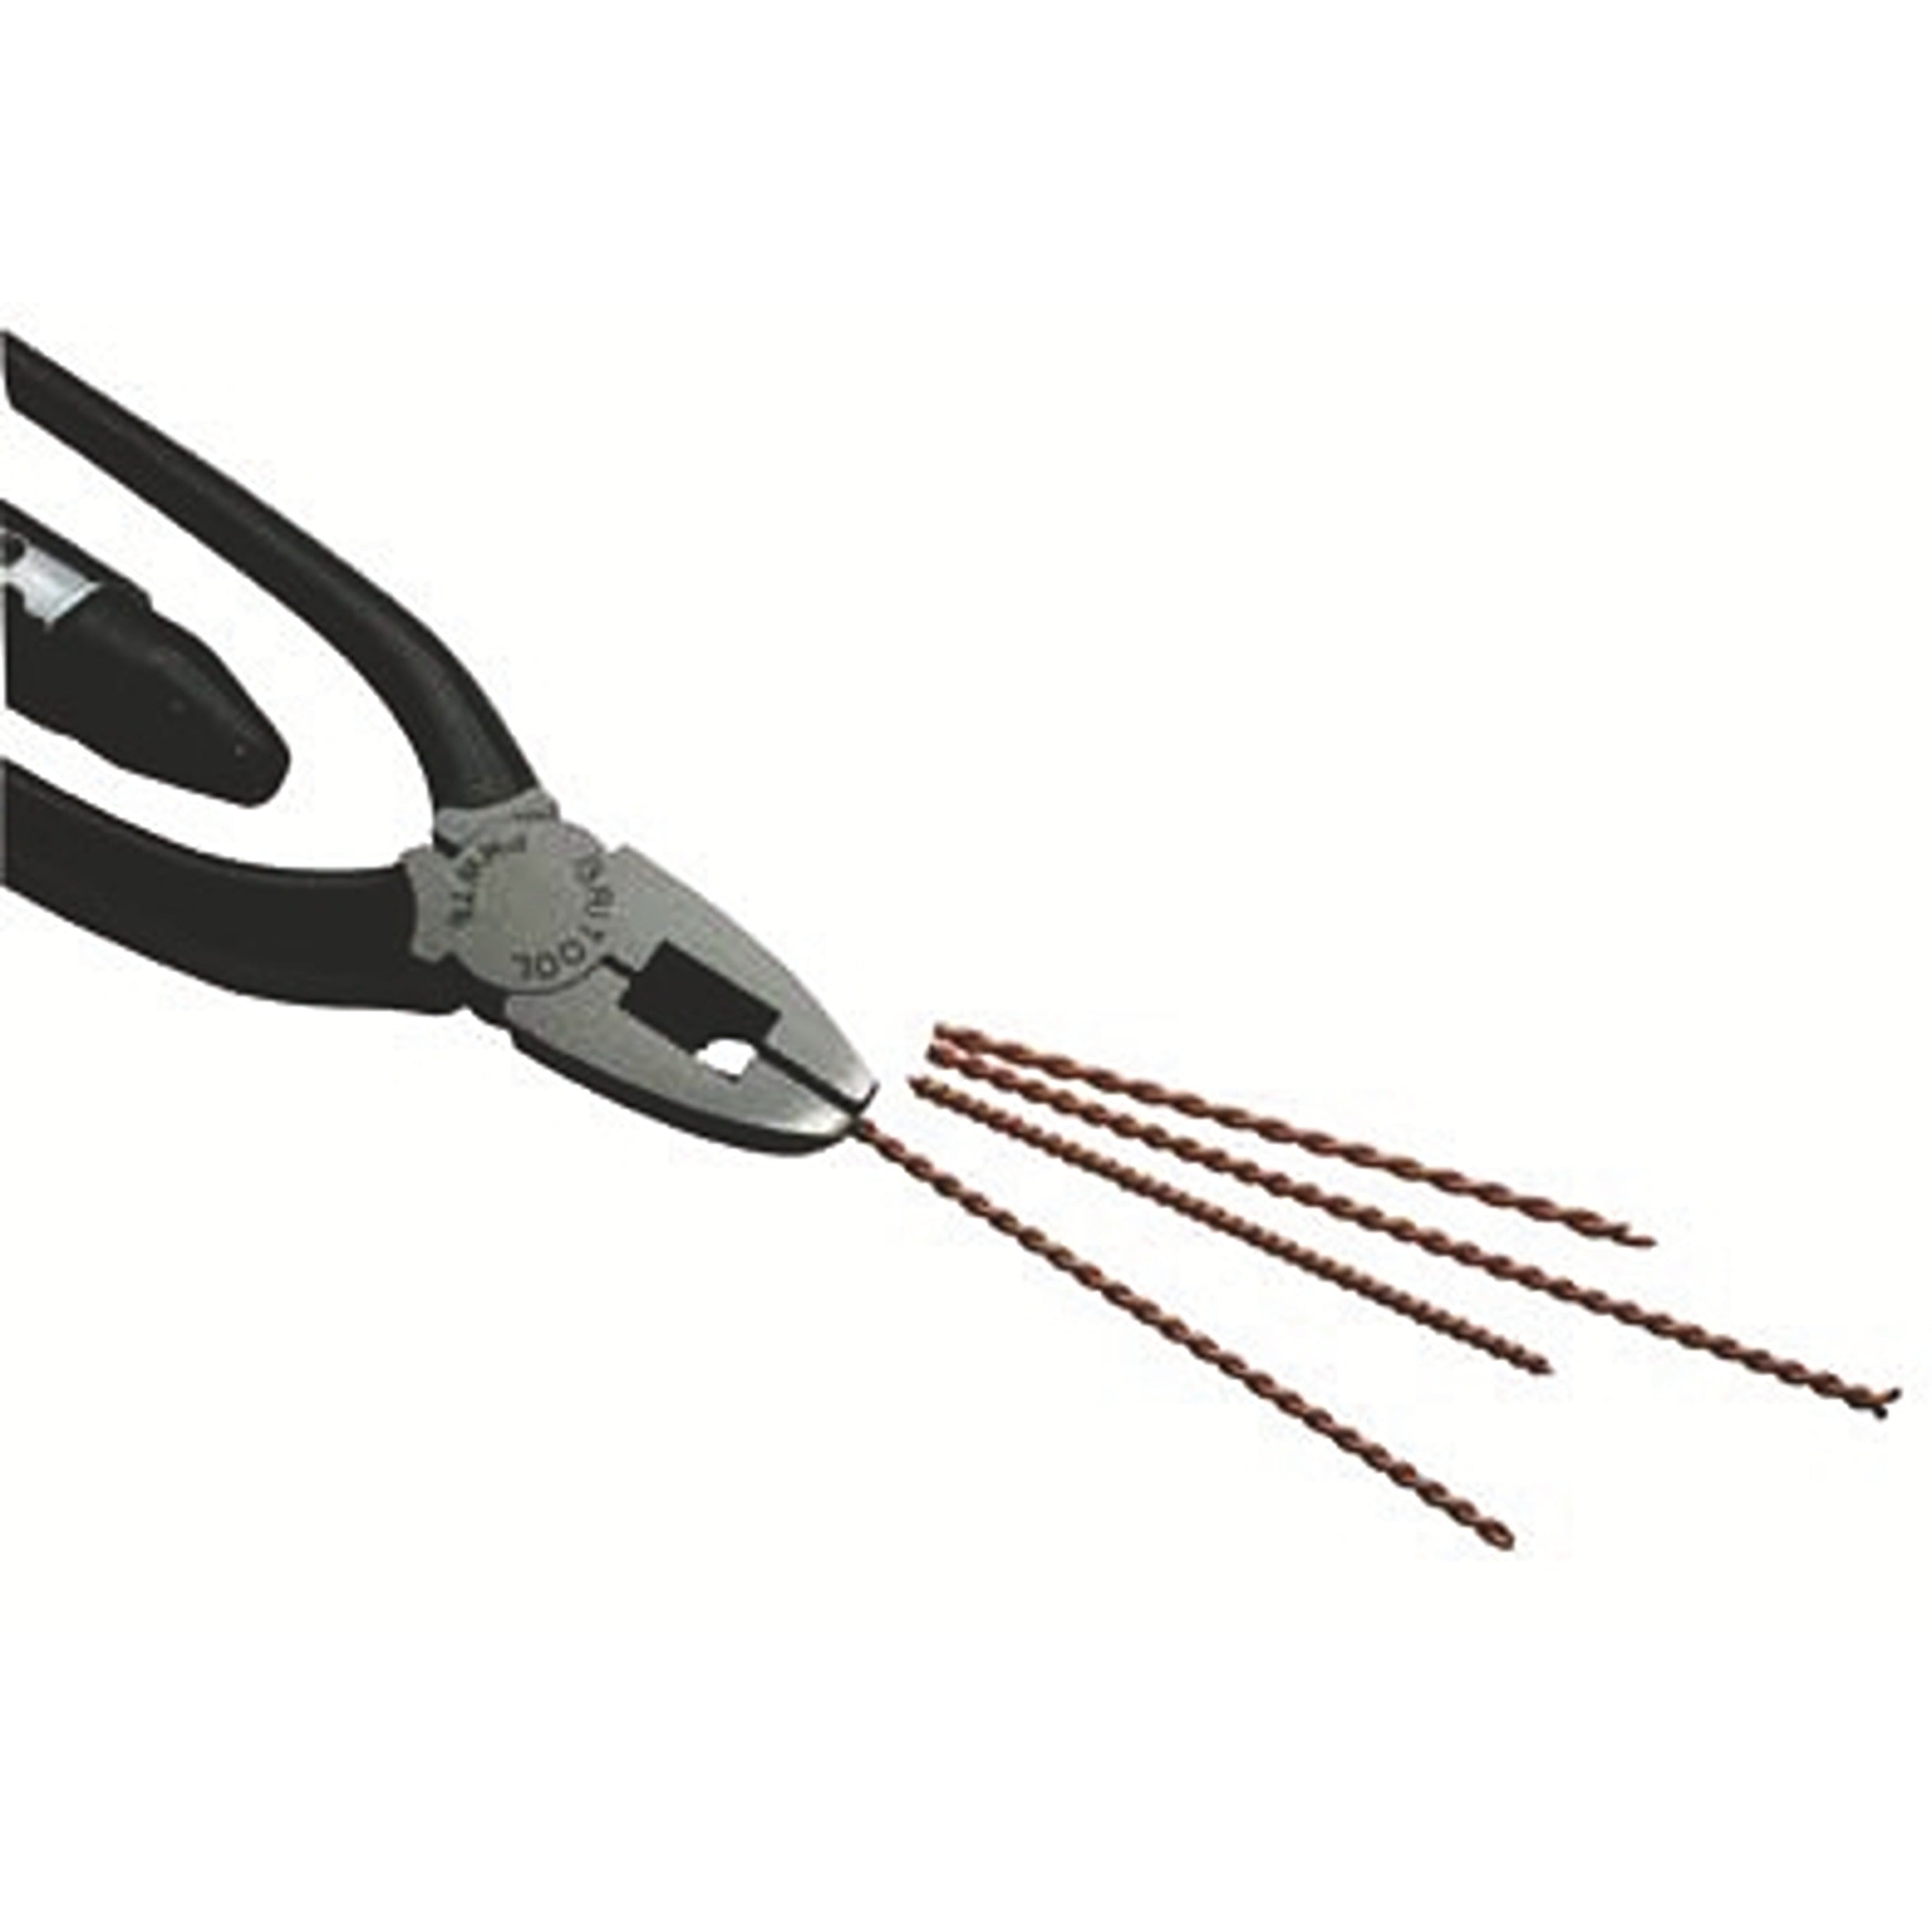 BRITOOL PMWT Wire Twisting Plier (BRITOOL) - Premium Wire Twisting Plier from BRITOOL - Shop now at Yew Aik.